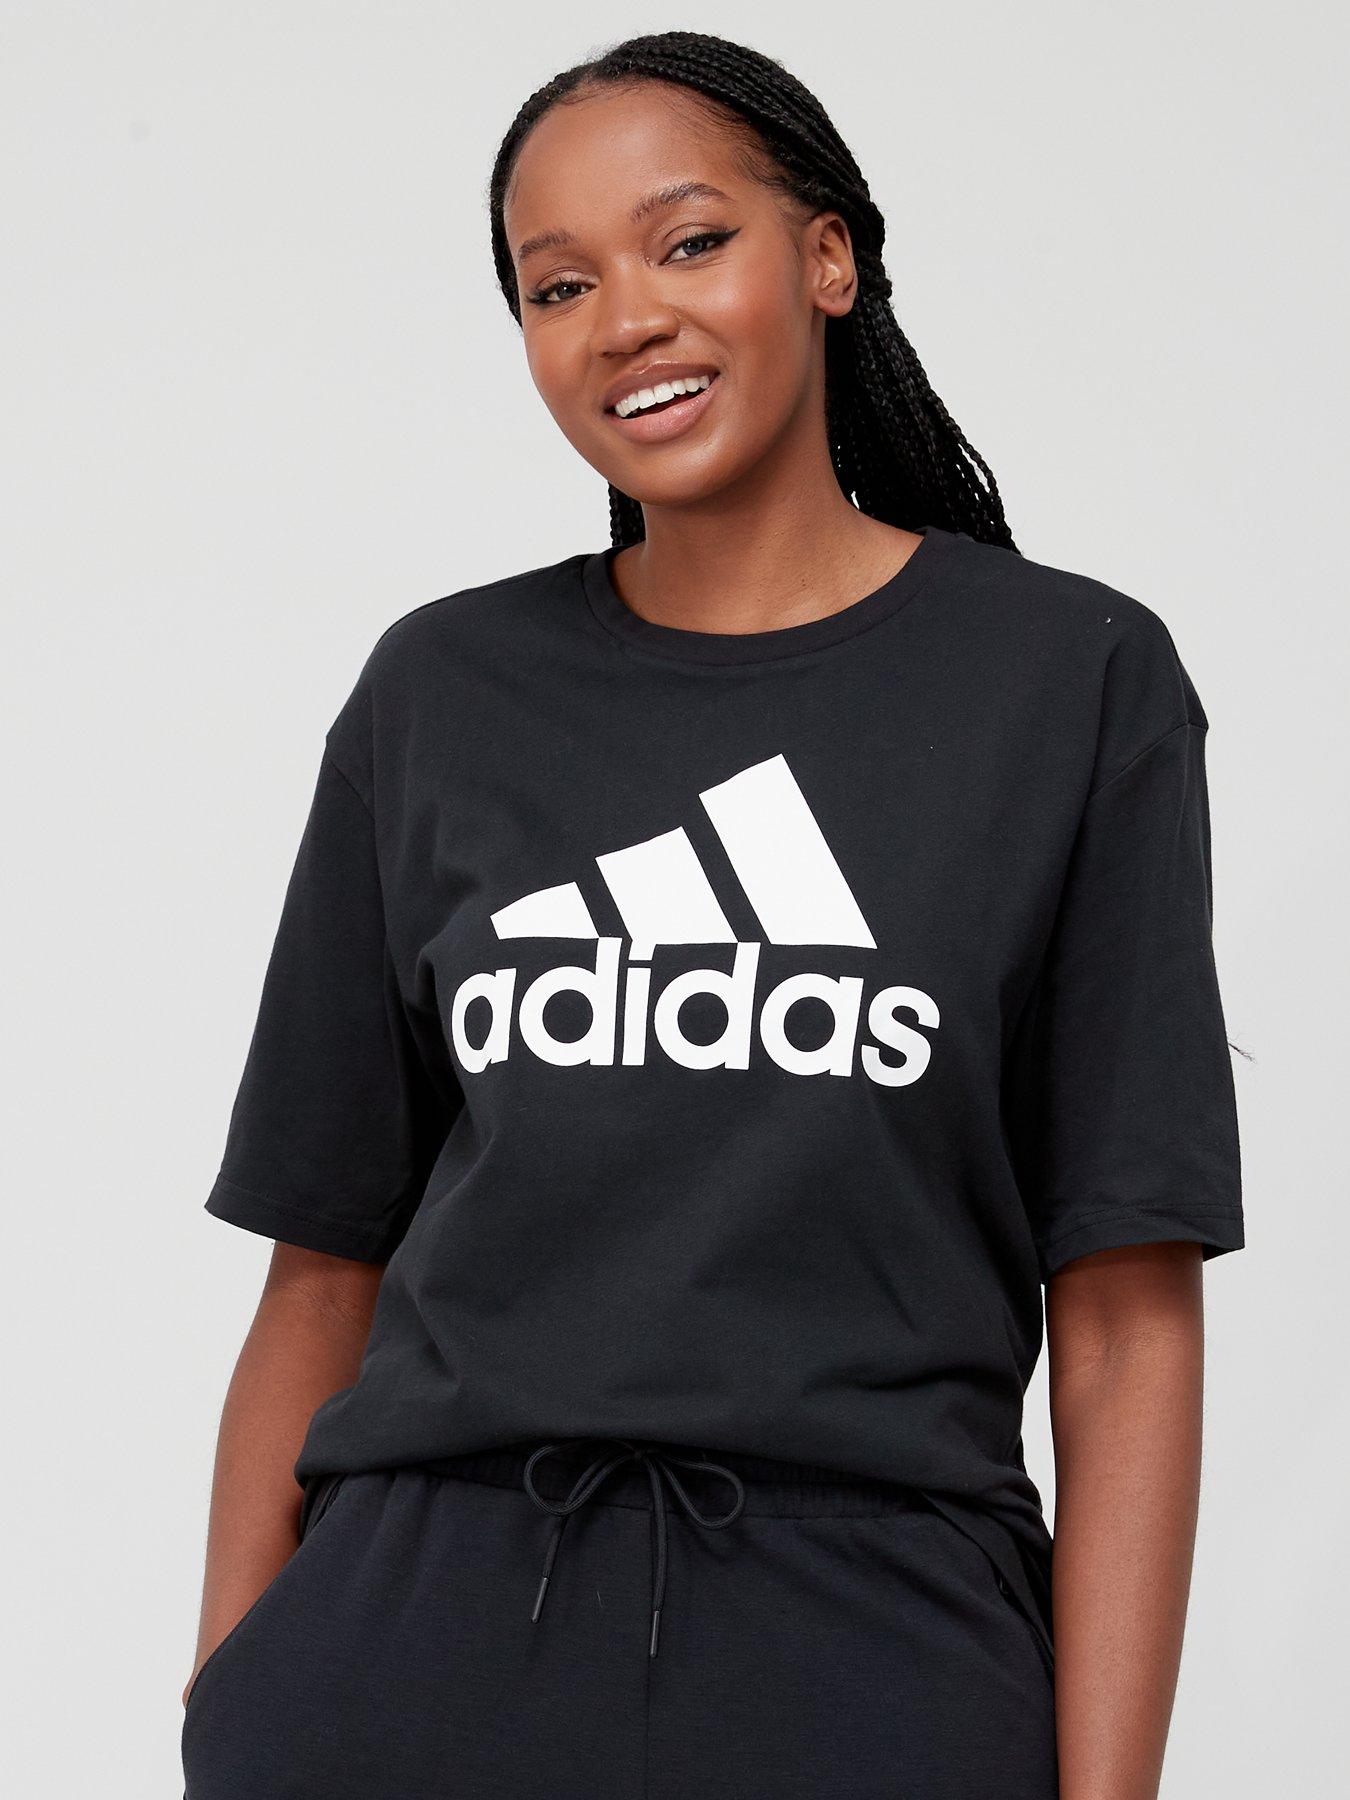 Ireland | | t-shirts | & Very Main Women Tops | Collection Adidas